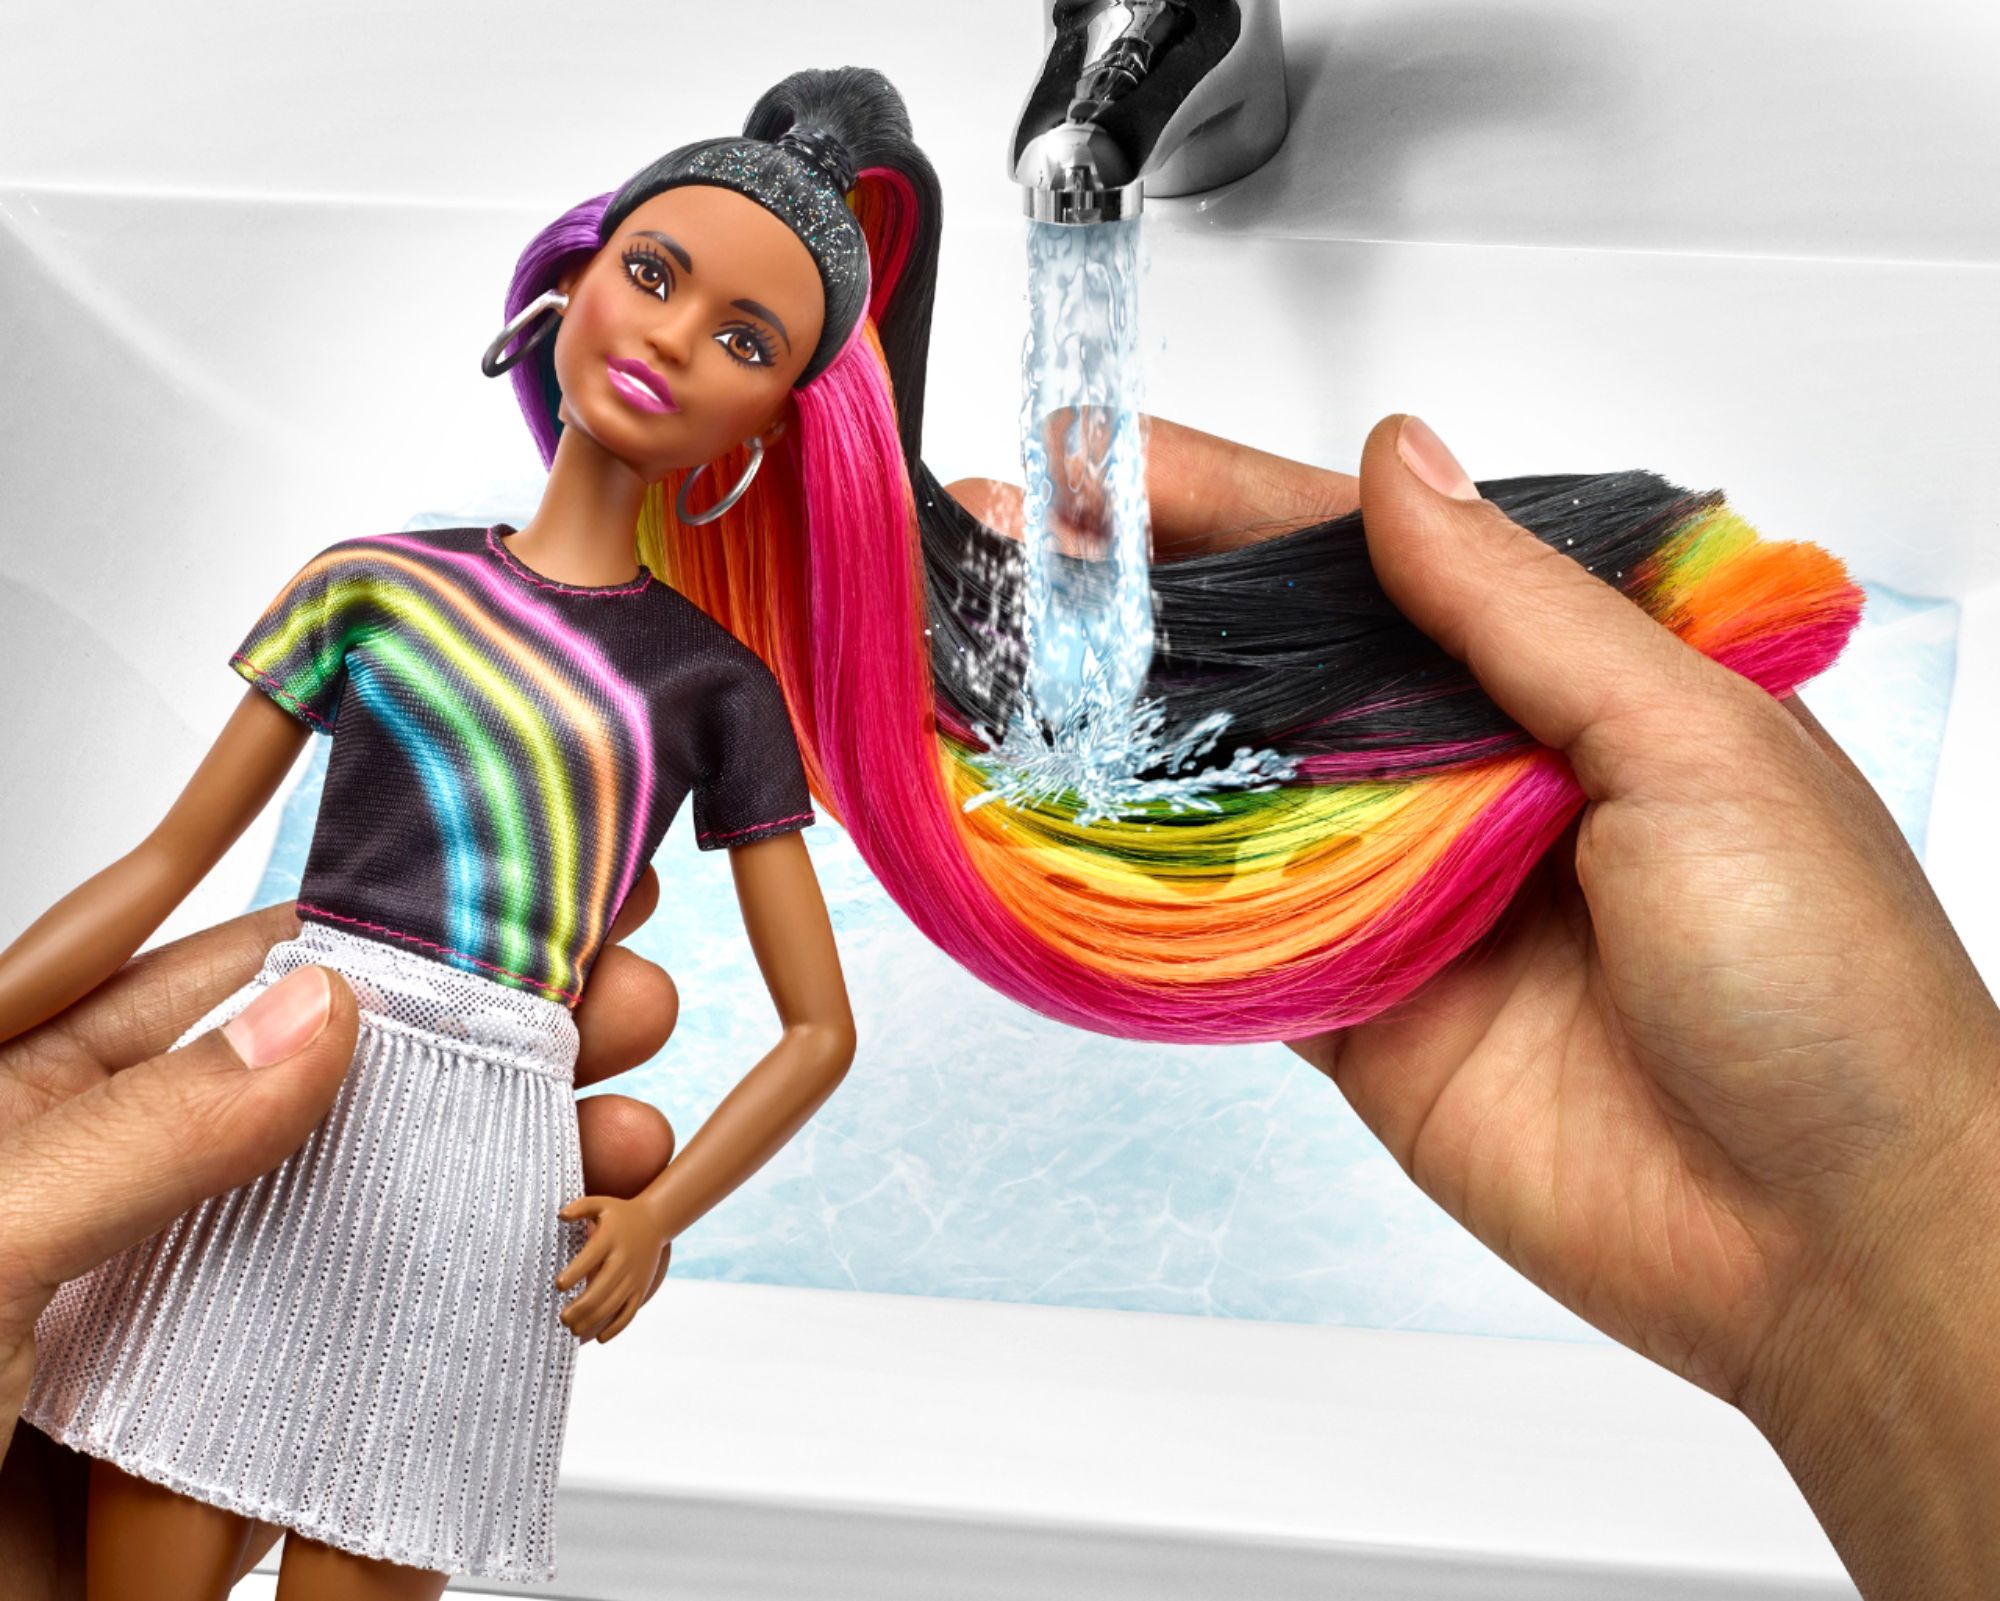 Barbie - With the #Barbie Rainbow Sparkle Hair doll, your future